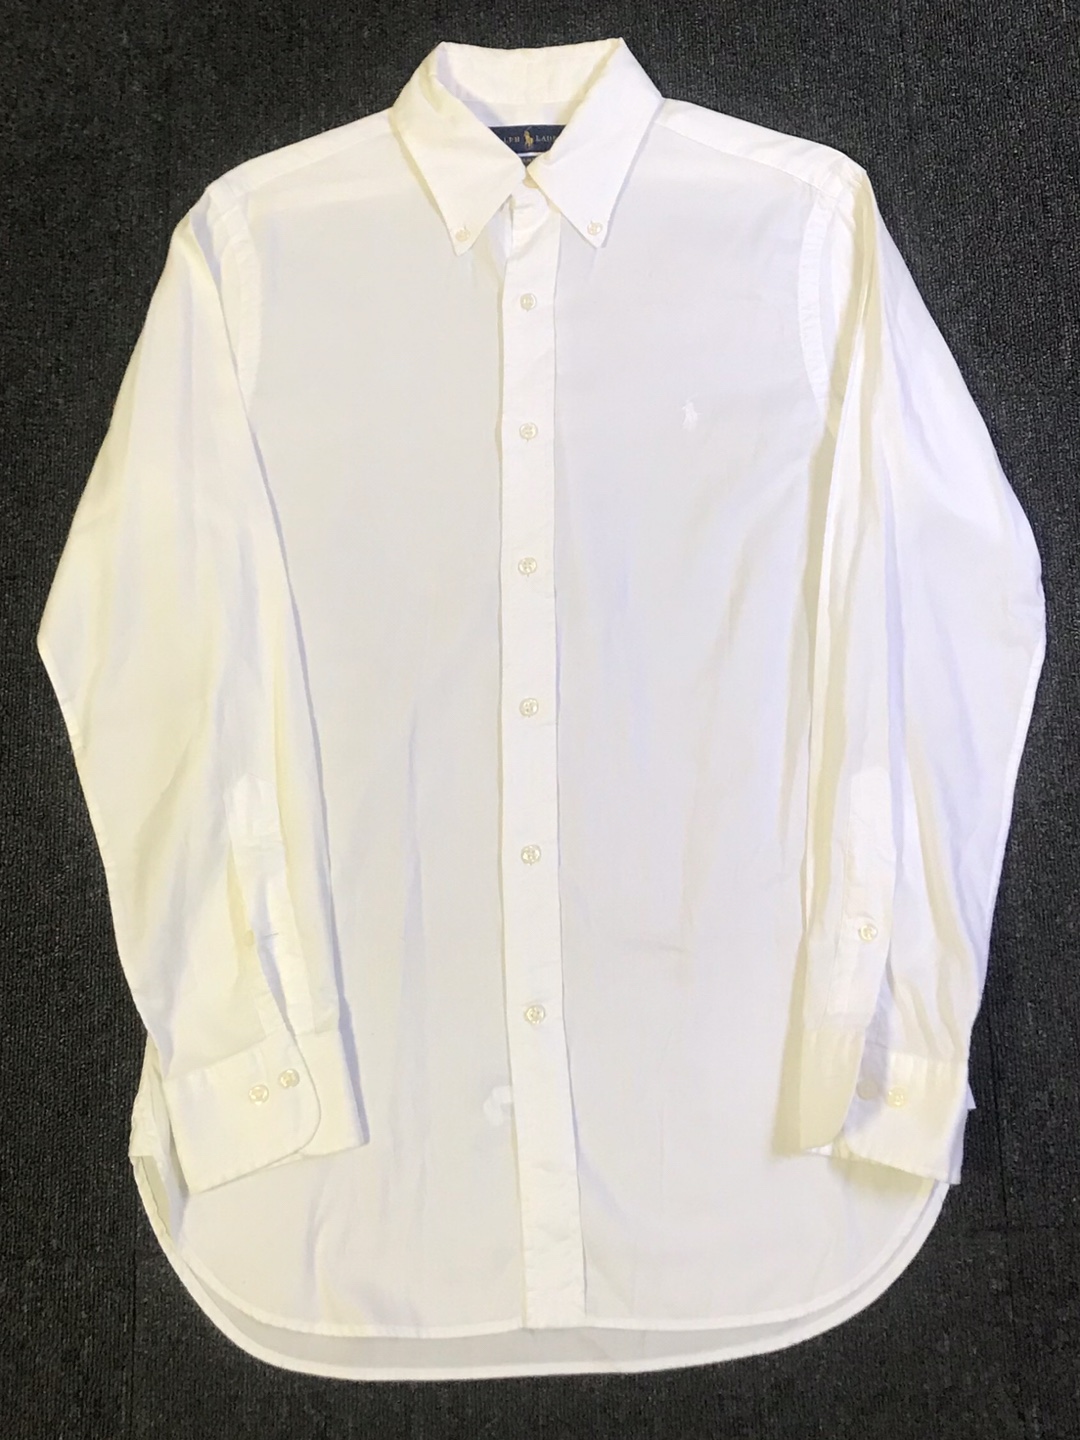 Polo RL stretch oxford slim fit bd shirt (15 32-33 size, ~100 추천)